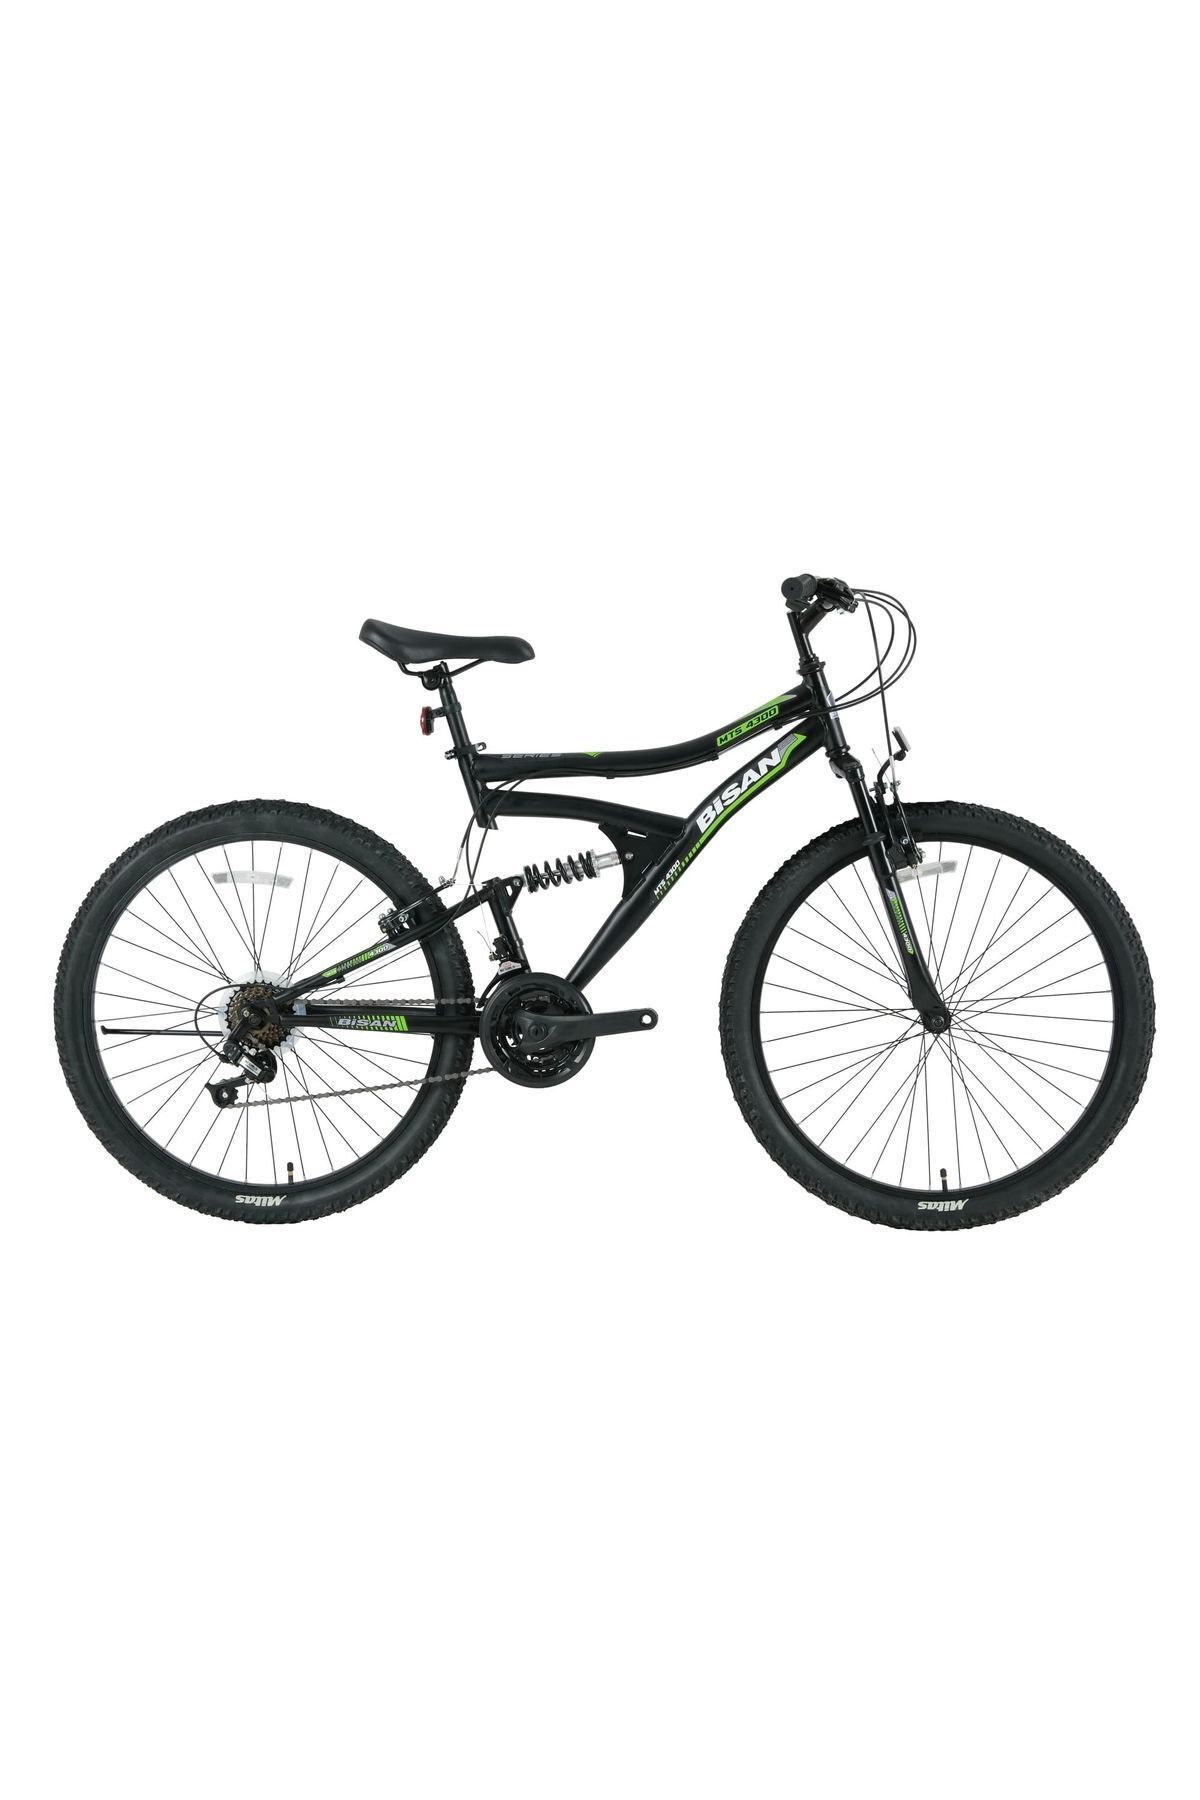 Bisan Mts 4300 V Fren 21 Vites 26 Jant Dağ Bisikleti Çift Amortisörlü Siyah Yeşil 40 Kadro